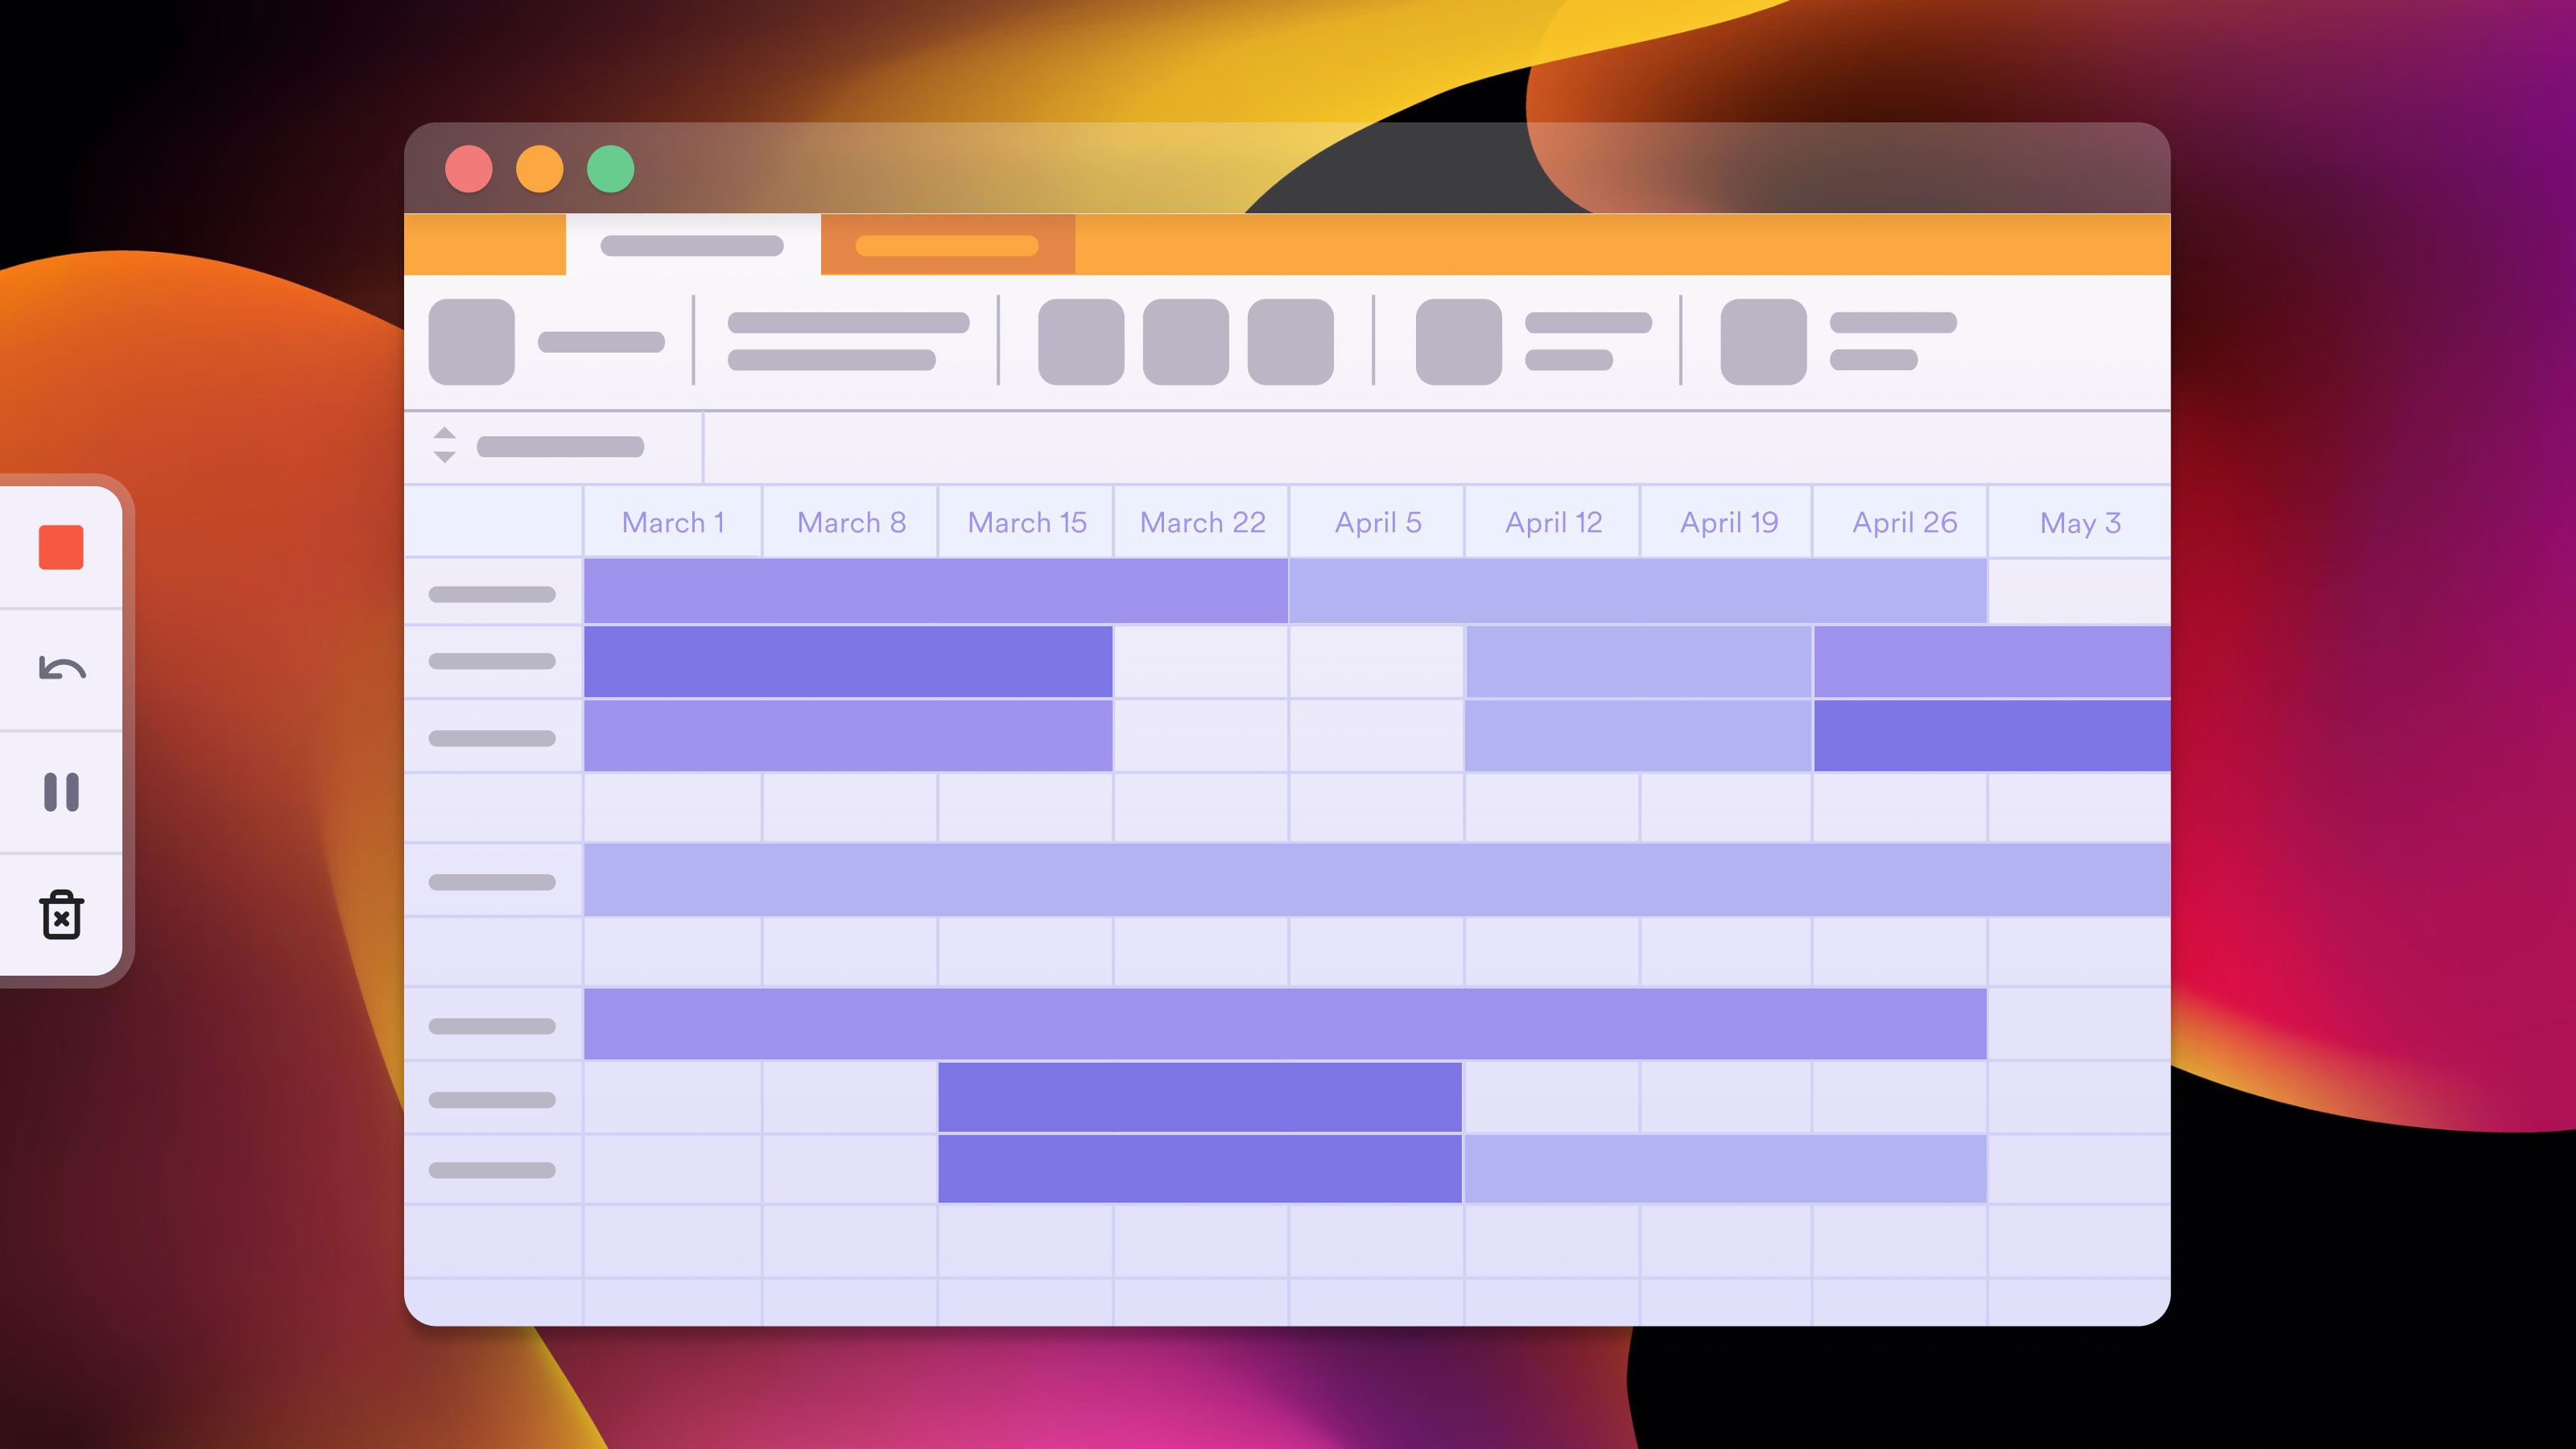 Product manager walks through a calendar using Loom